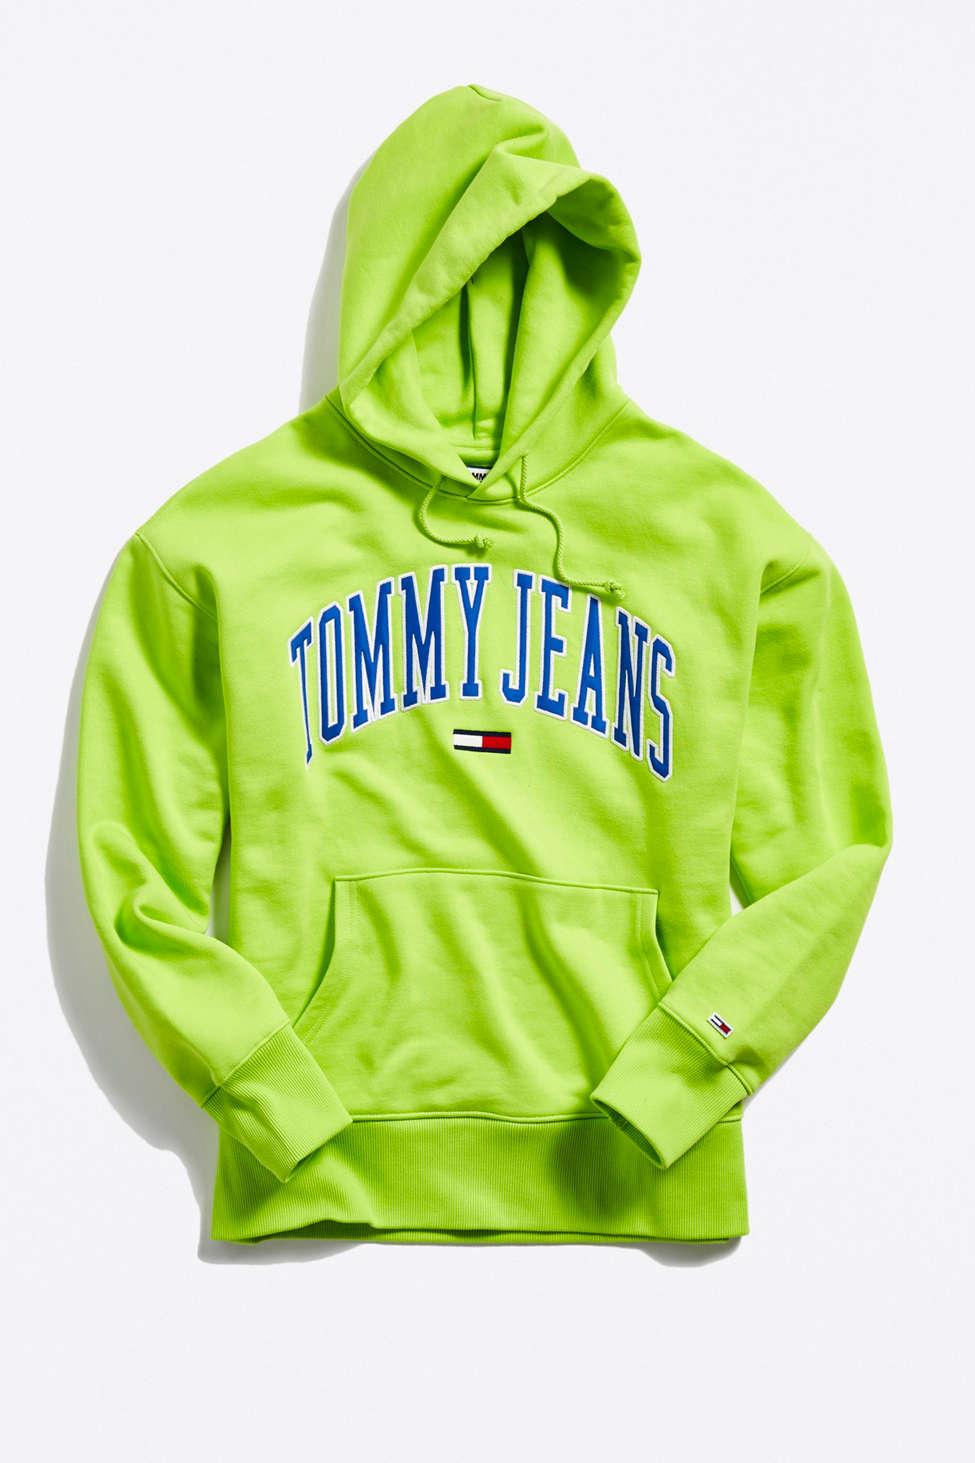 tommy hilfiger classic logo sweatshirt